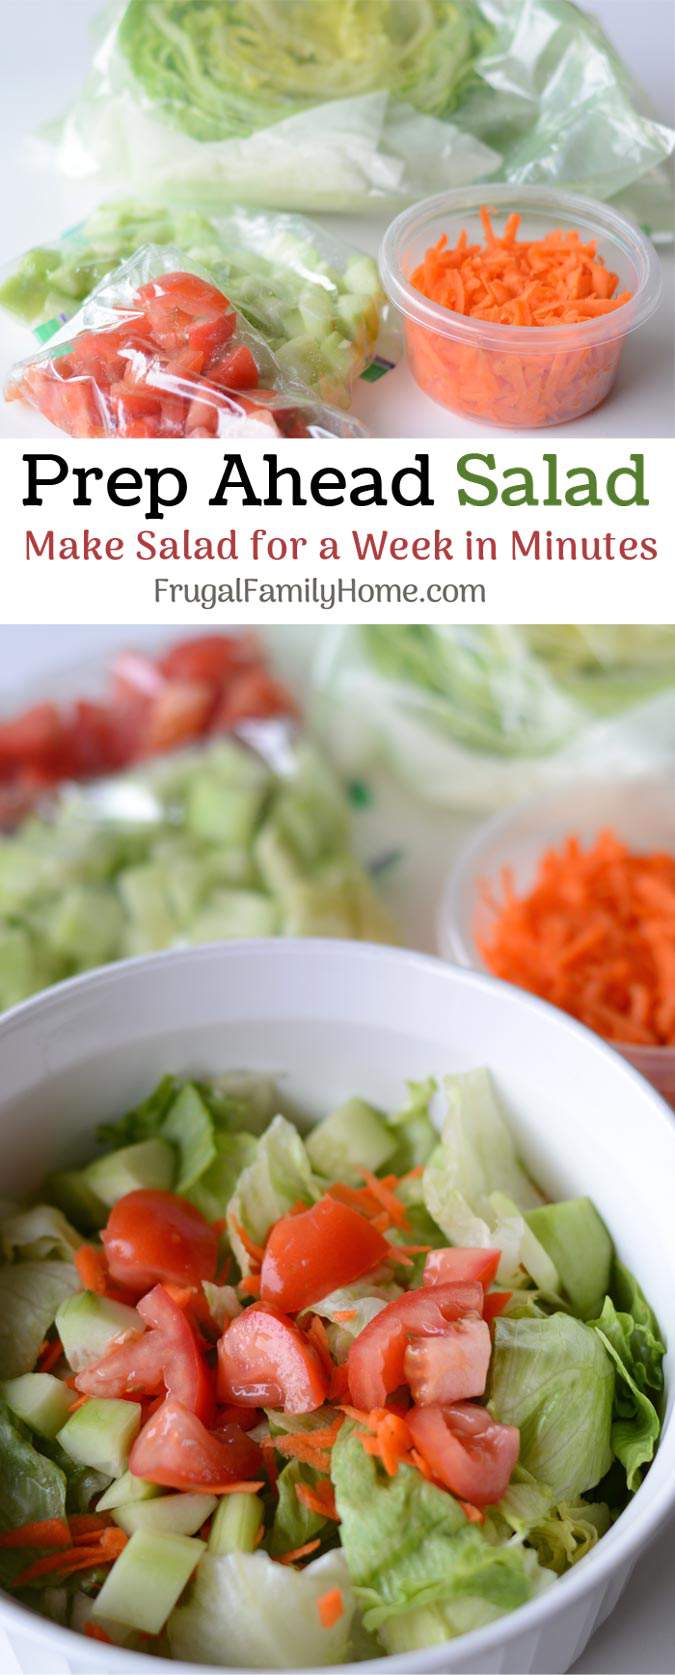 https://frugalfamilyhome.com/wp-content/uploads/2017/05/Prep-Ahead-Salad-Long-Pin.jpg